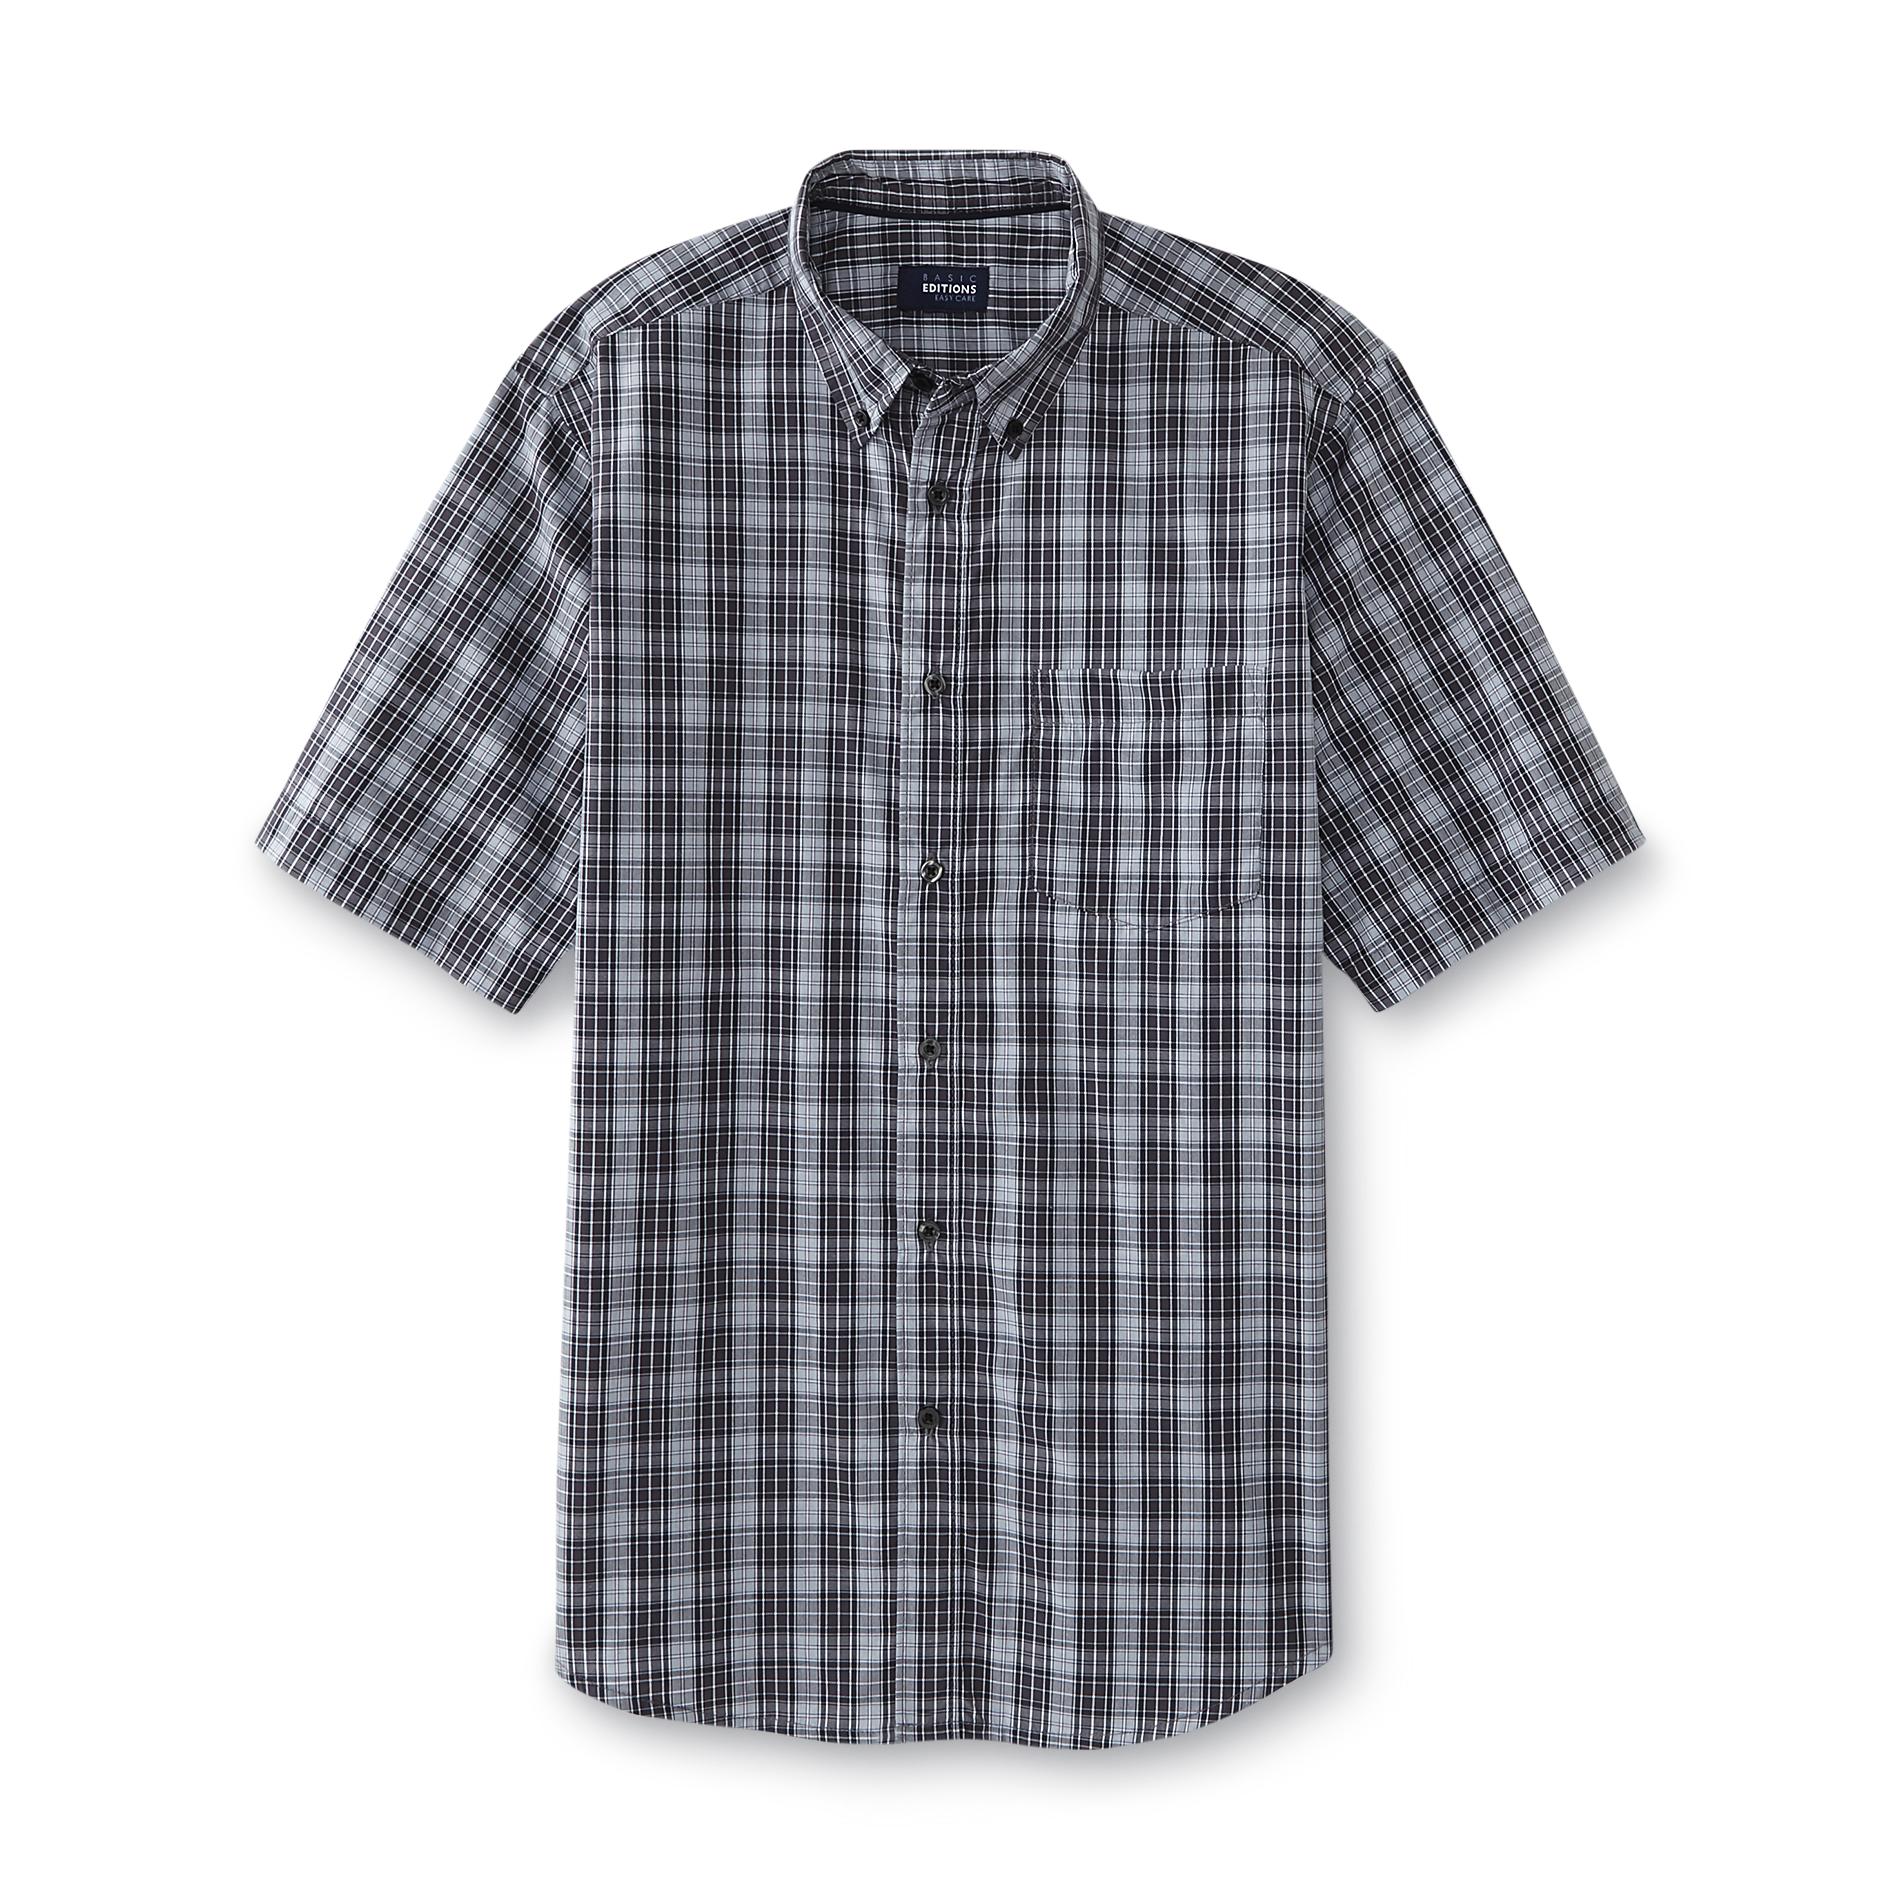 Men's Short-Sleeve Easy Care Shirt - Plaid